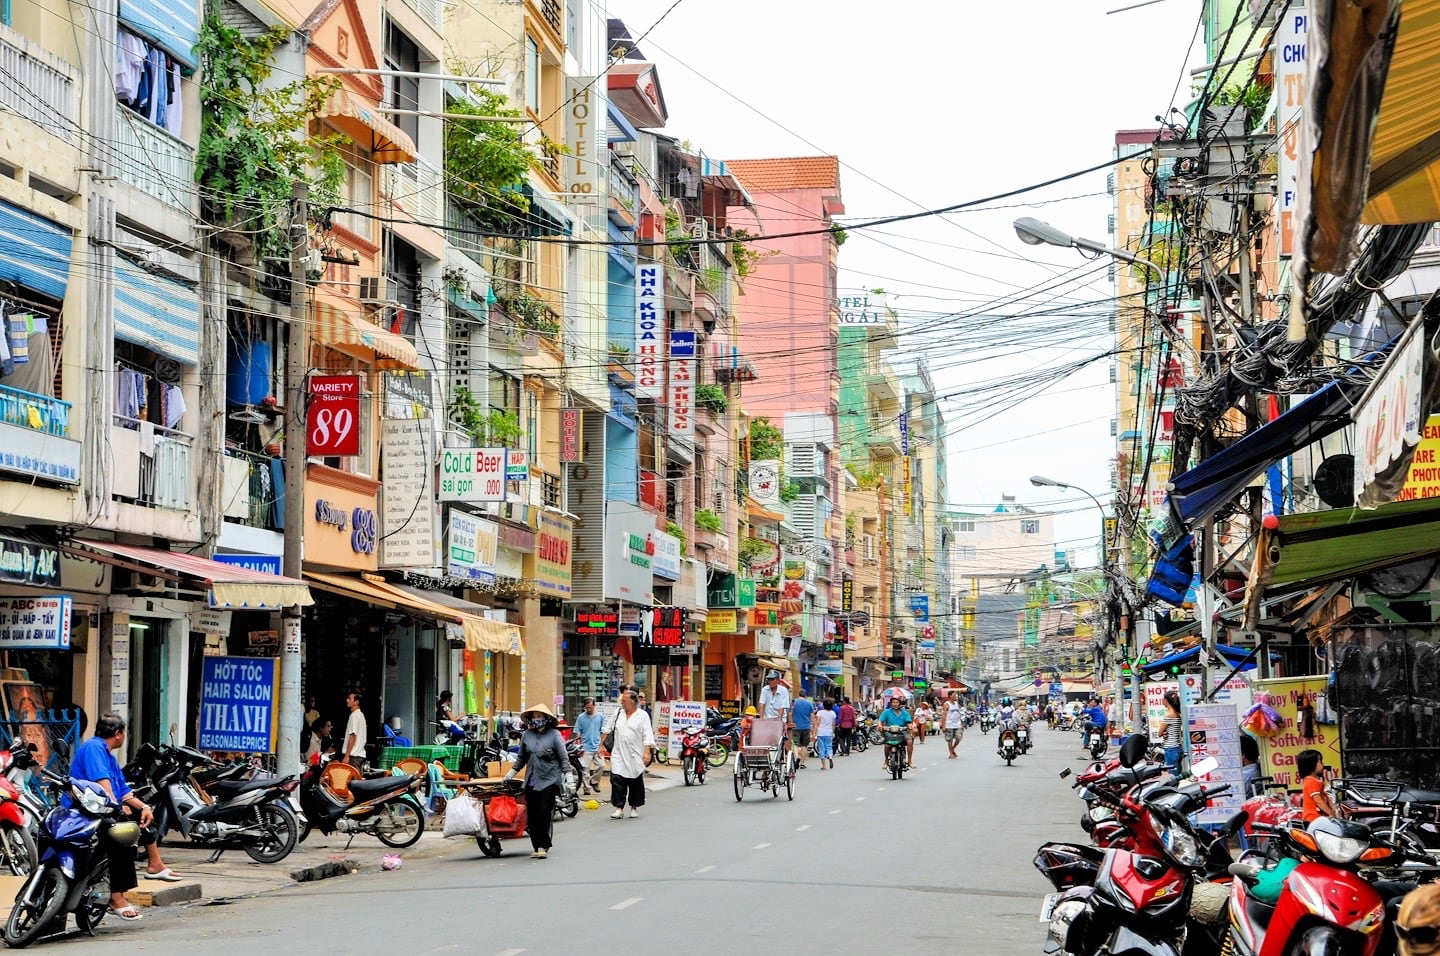 Bui Vien Ho Chi Minh City